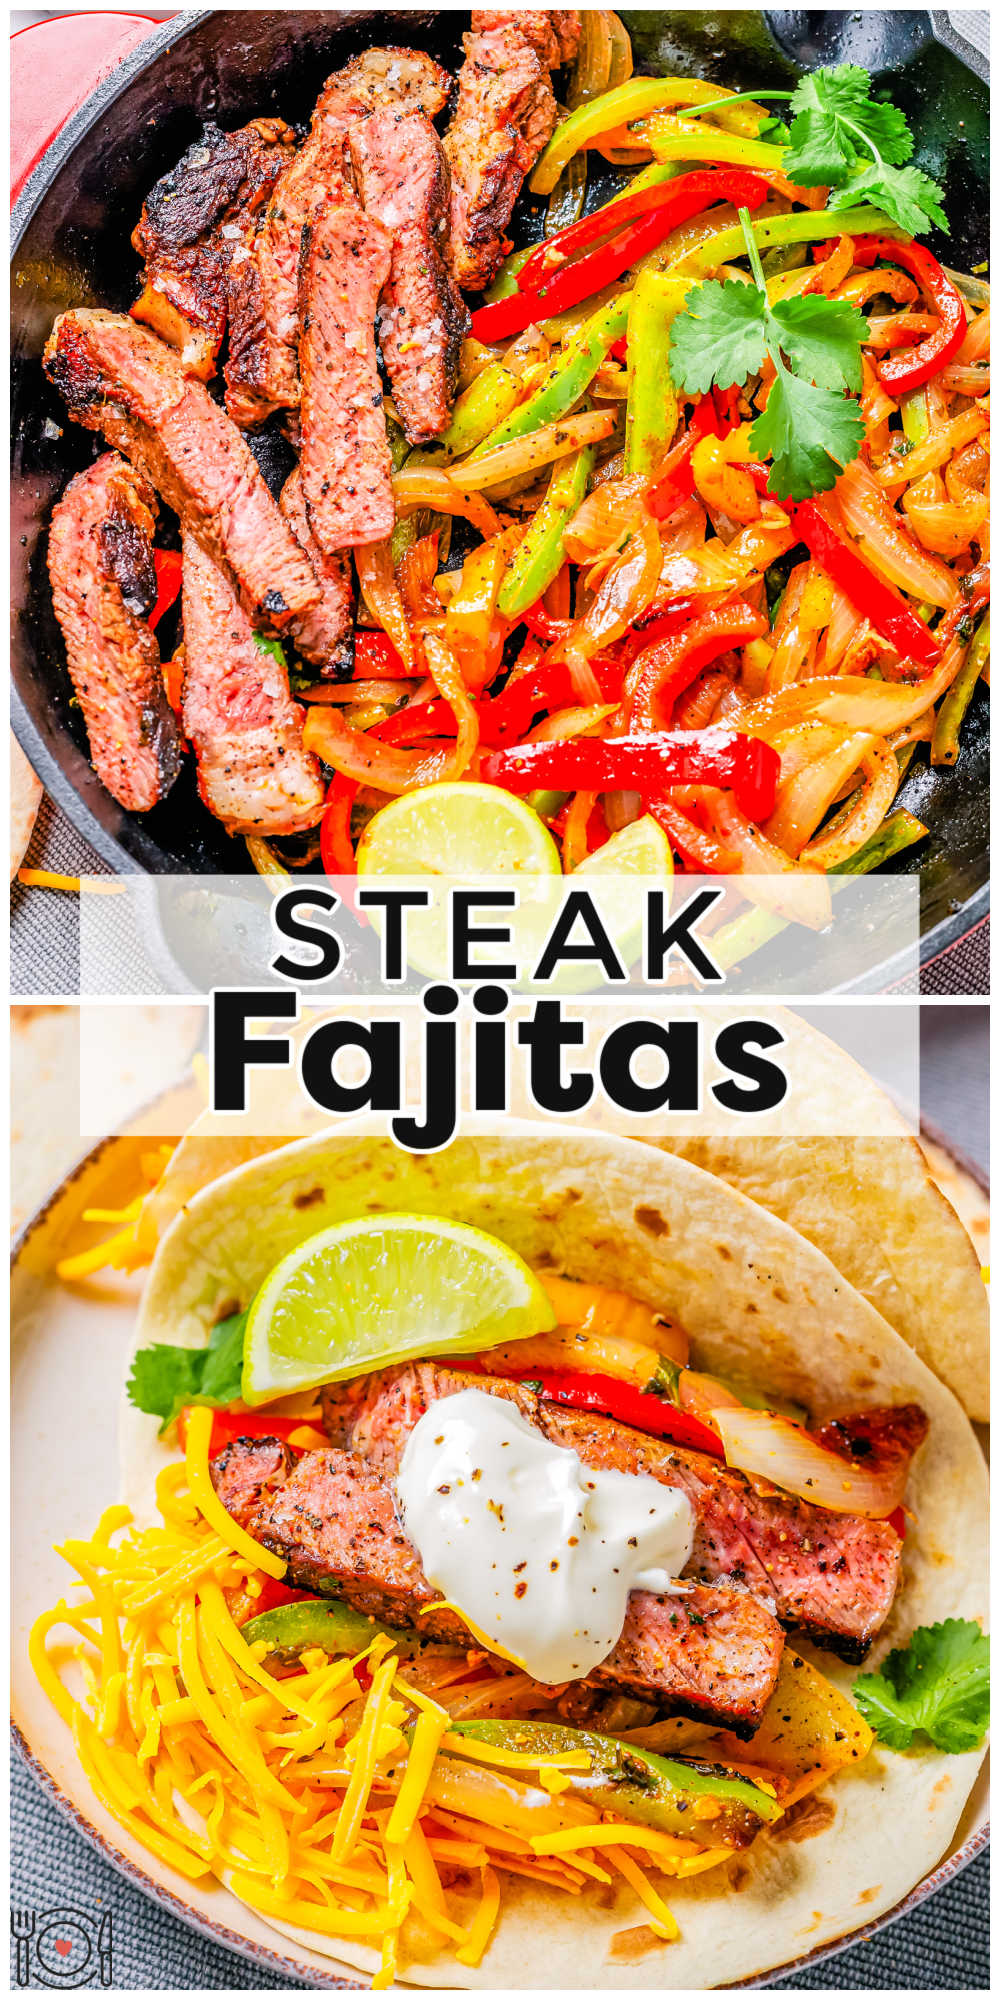 This Steak Fajitas recipe is an easy weeknight dinner made with steak, onions, peppers, and a tasty steak fajita marinade. via @foodfolksandfun